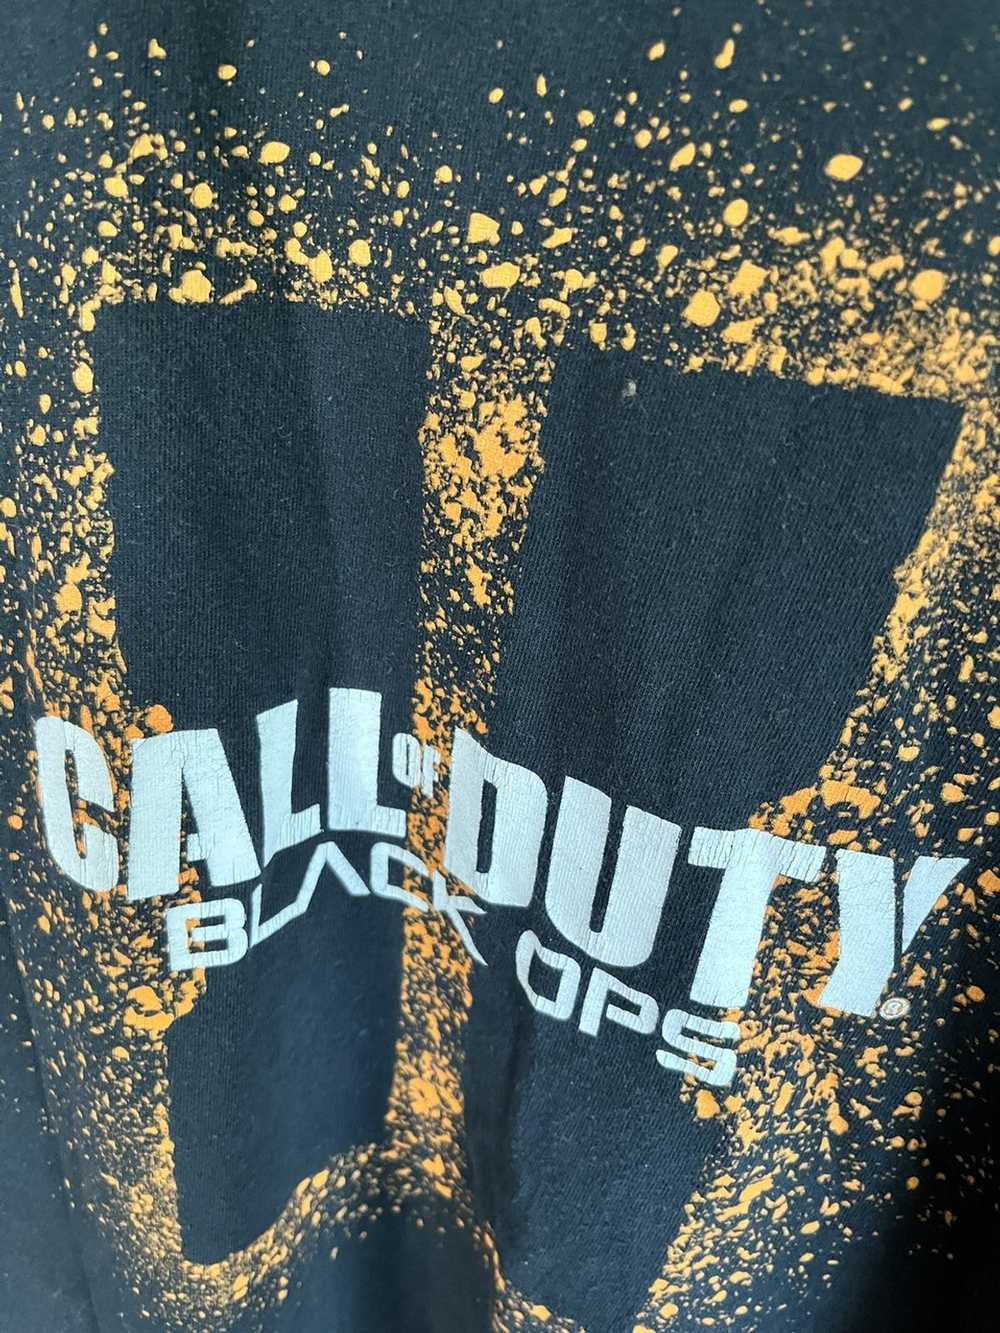 Vintage Call of Duty Tshirt - image 4